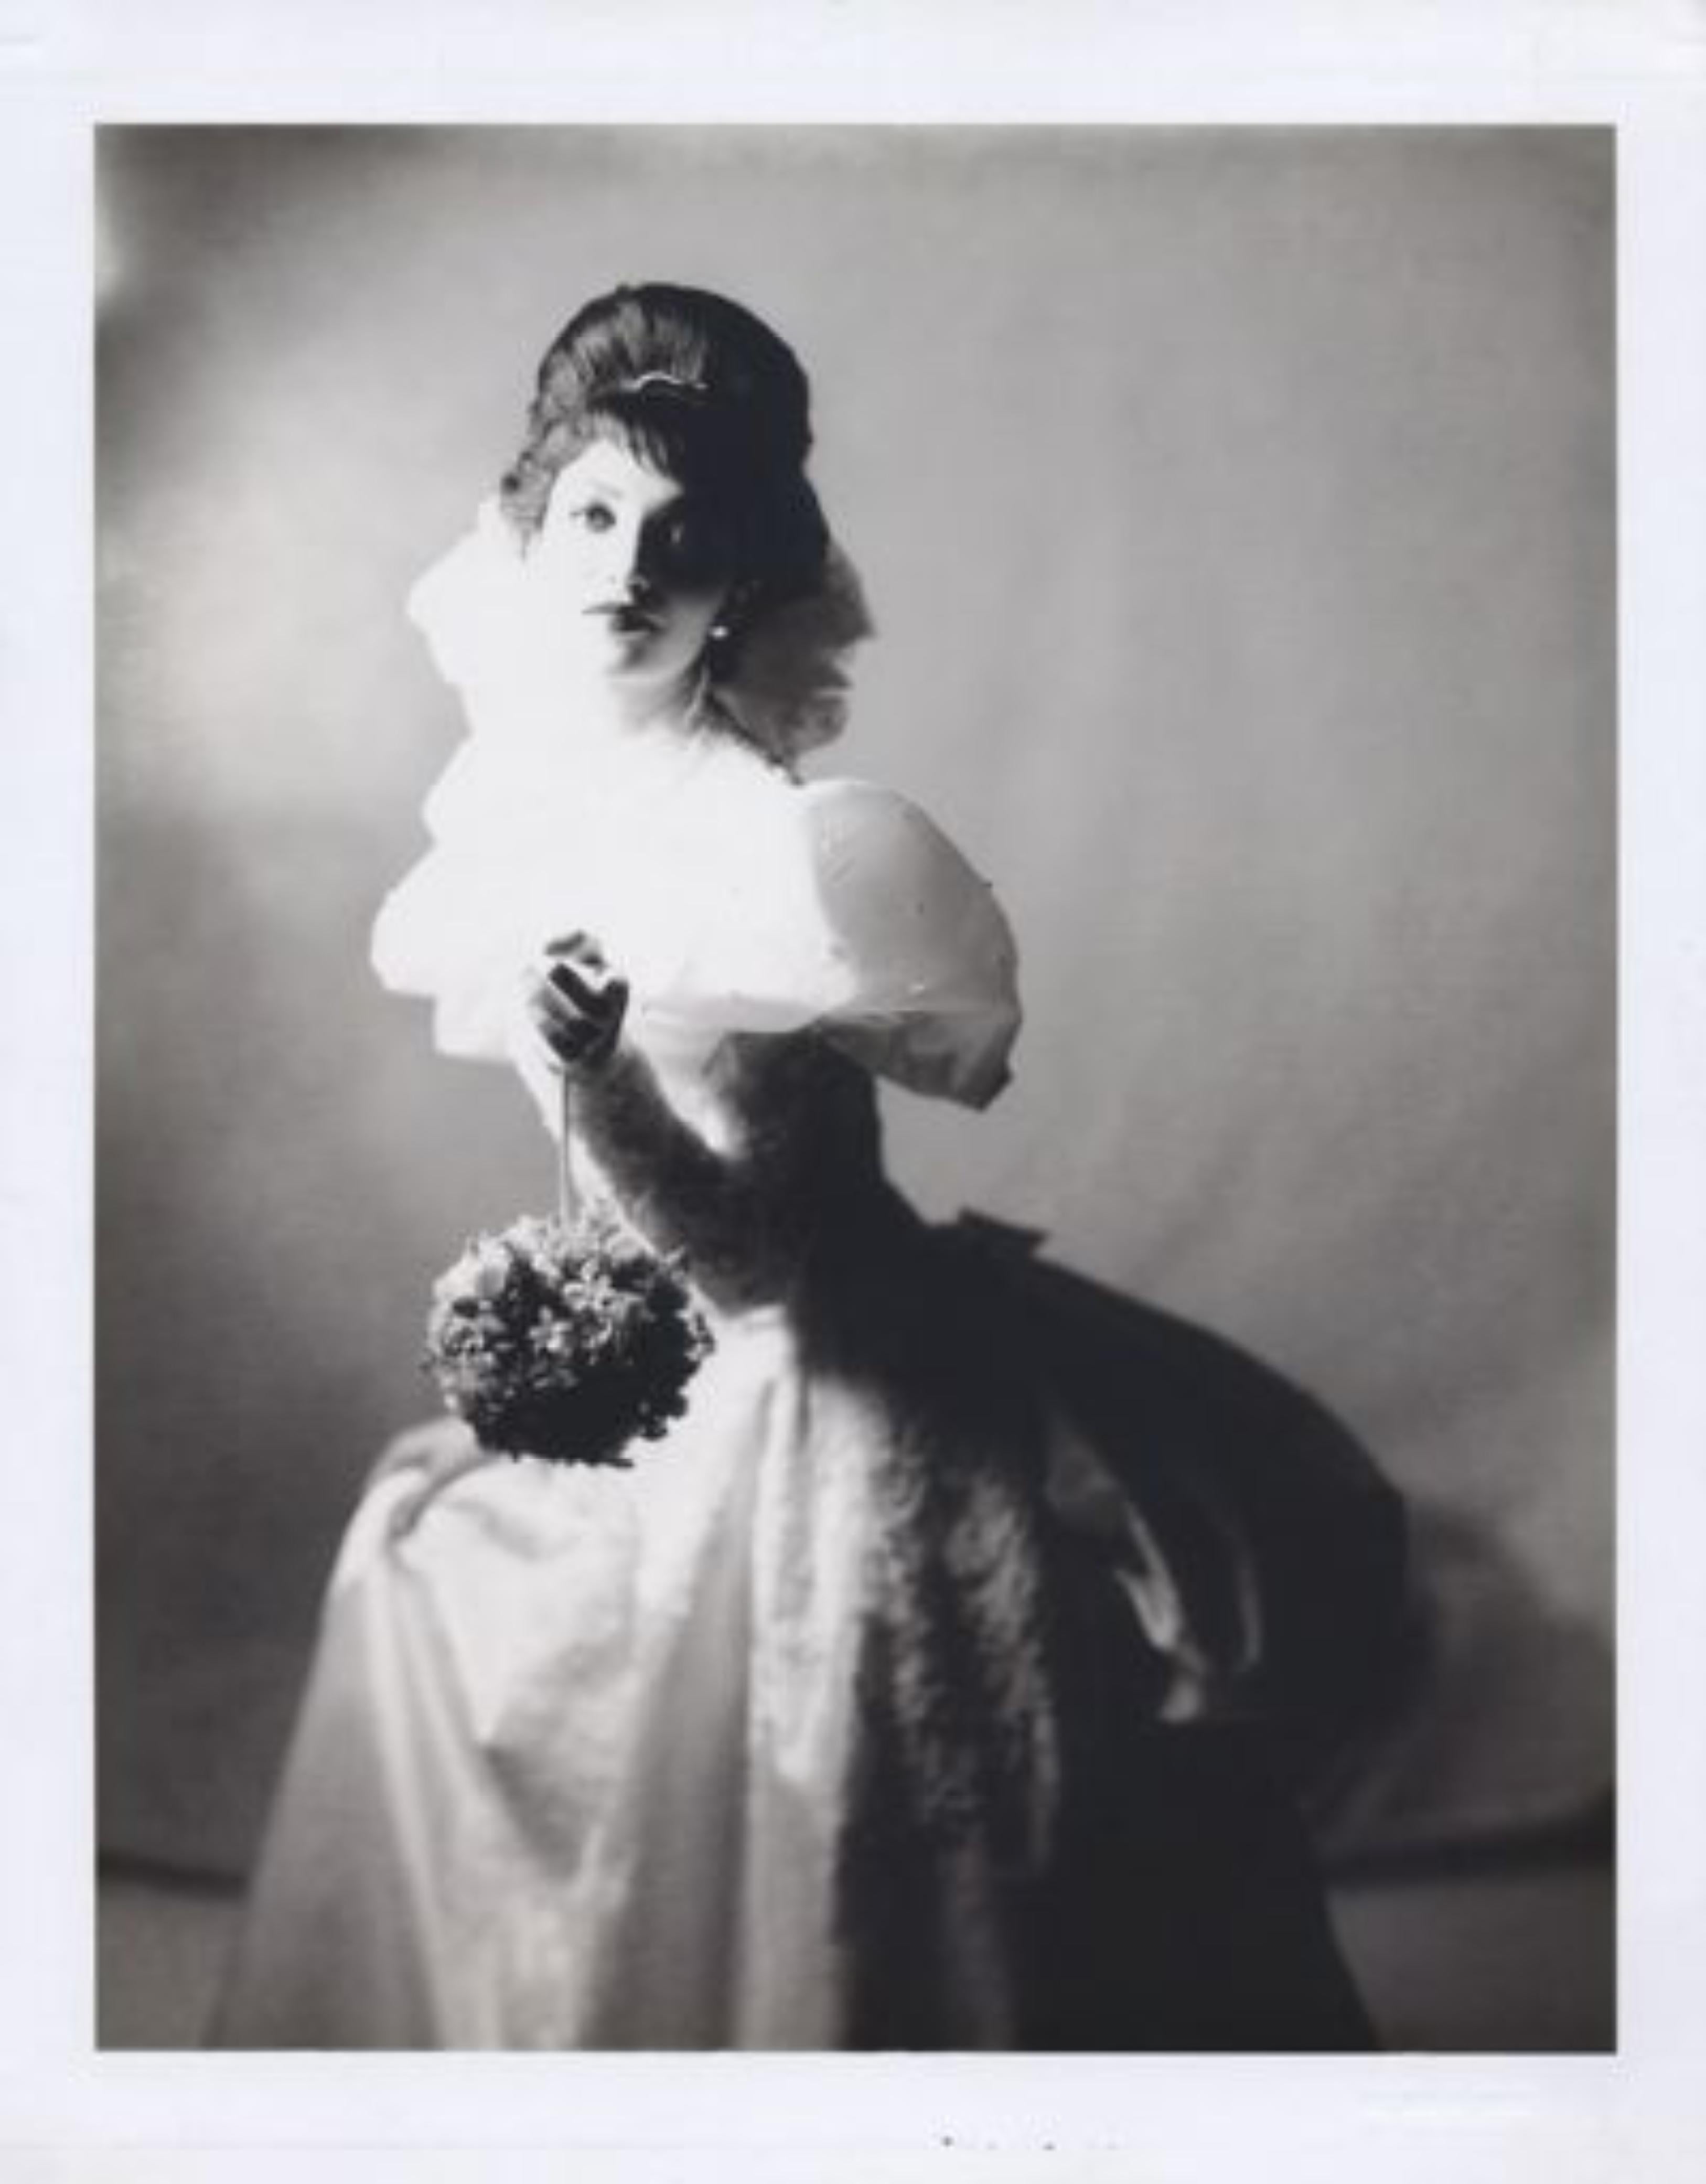 Jose Picayo Portrait Photograph - "Brides Magazine, Elenore", New York, NY, 1989